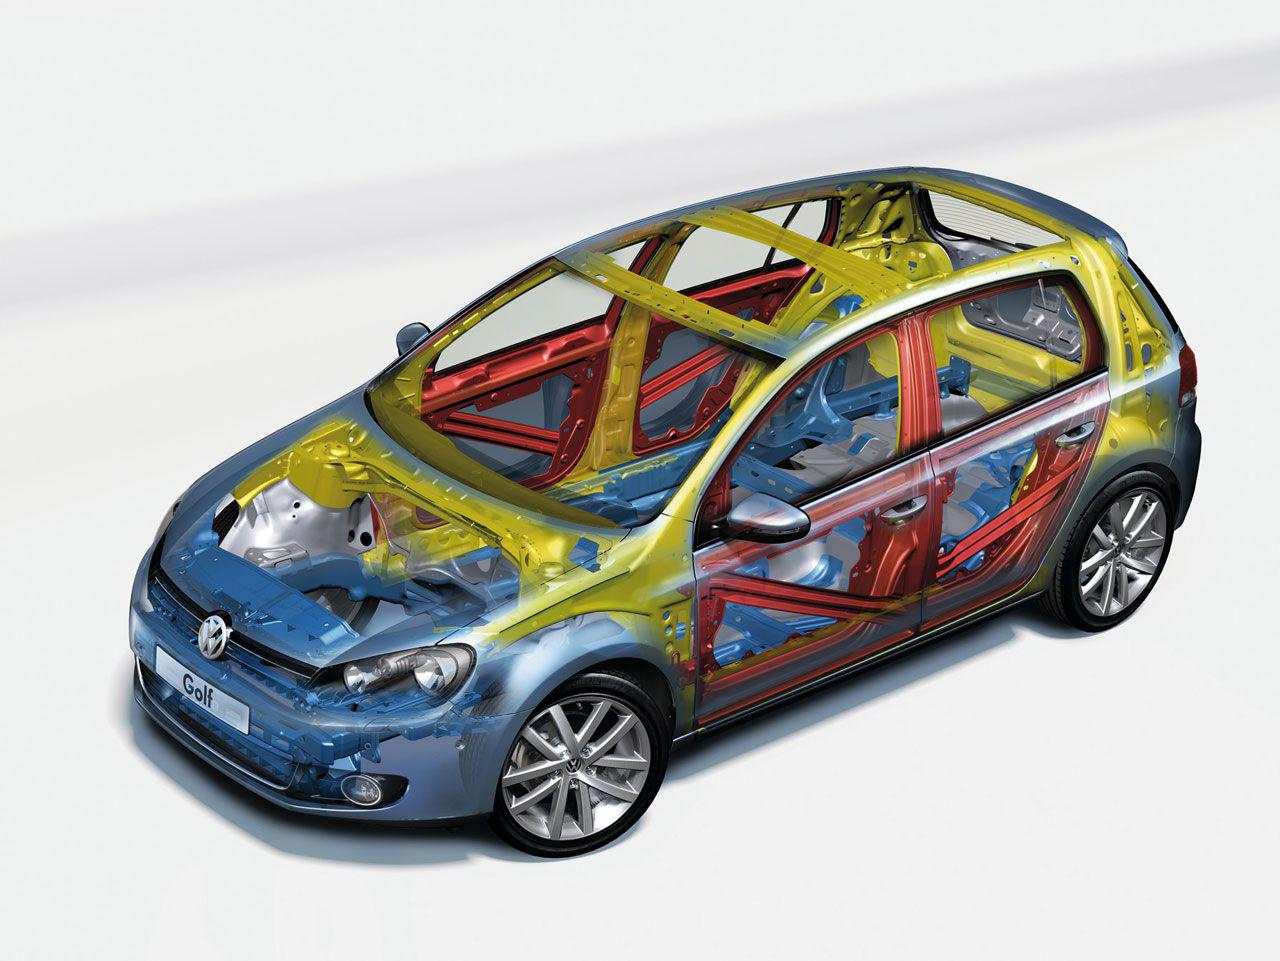 Volkswagen Golf â€“ cel mai sigur model testat de EuroNCAP in 2009